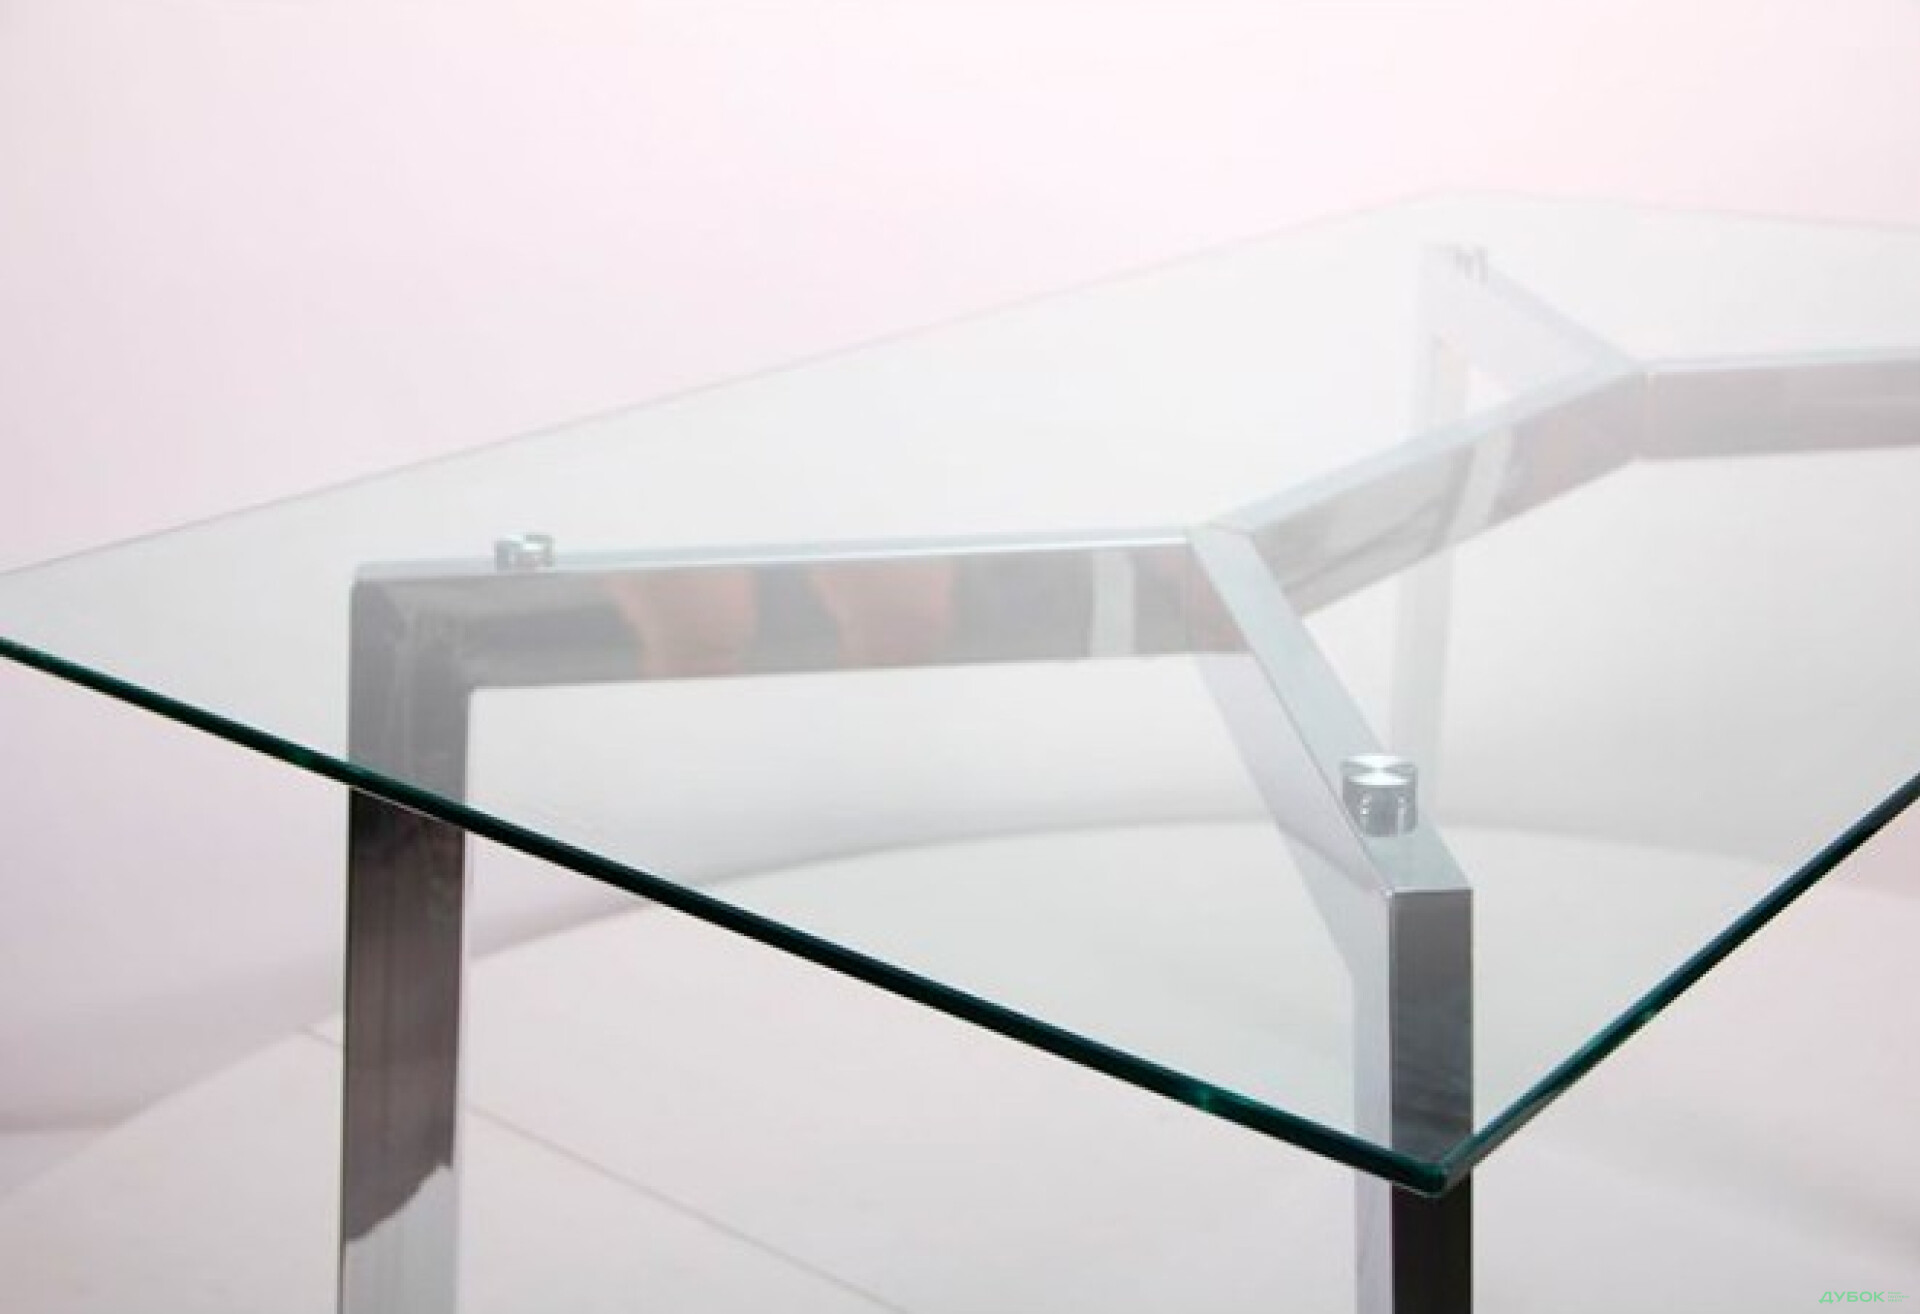 Фото 6 - Стол обеденный Луиджи DT-1610 хром / стекло прозрачное, арт. 521253 АМФ